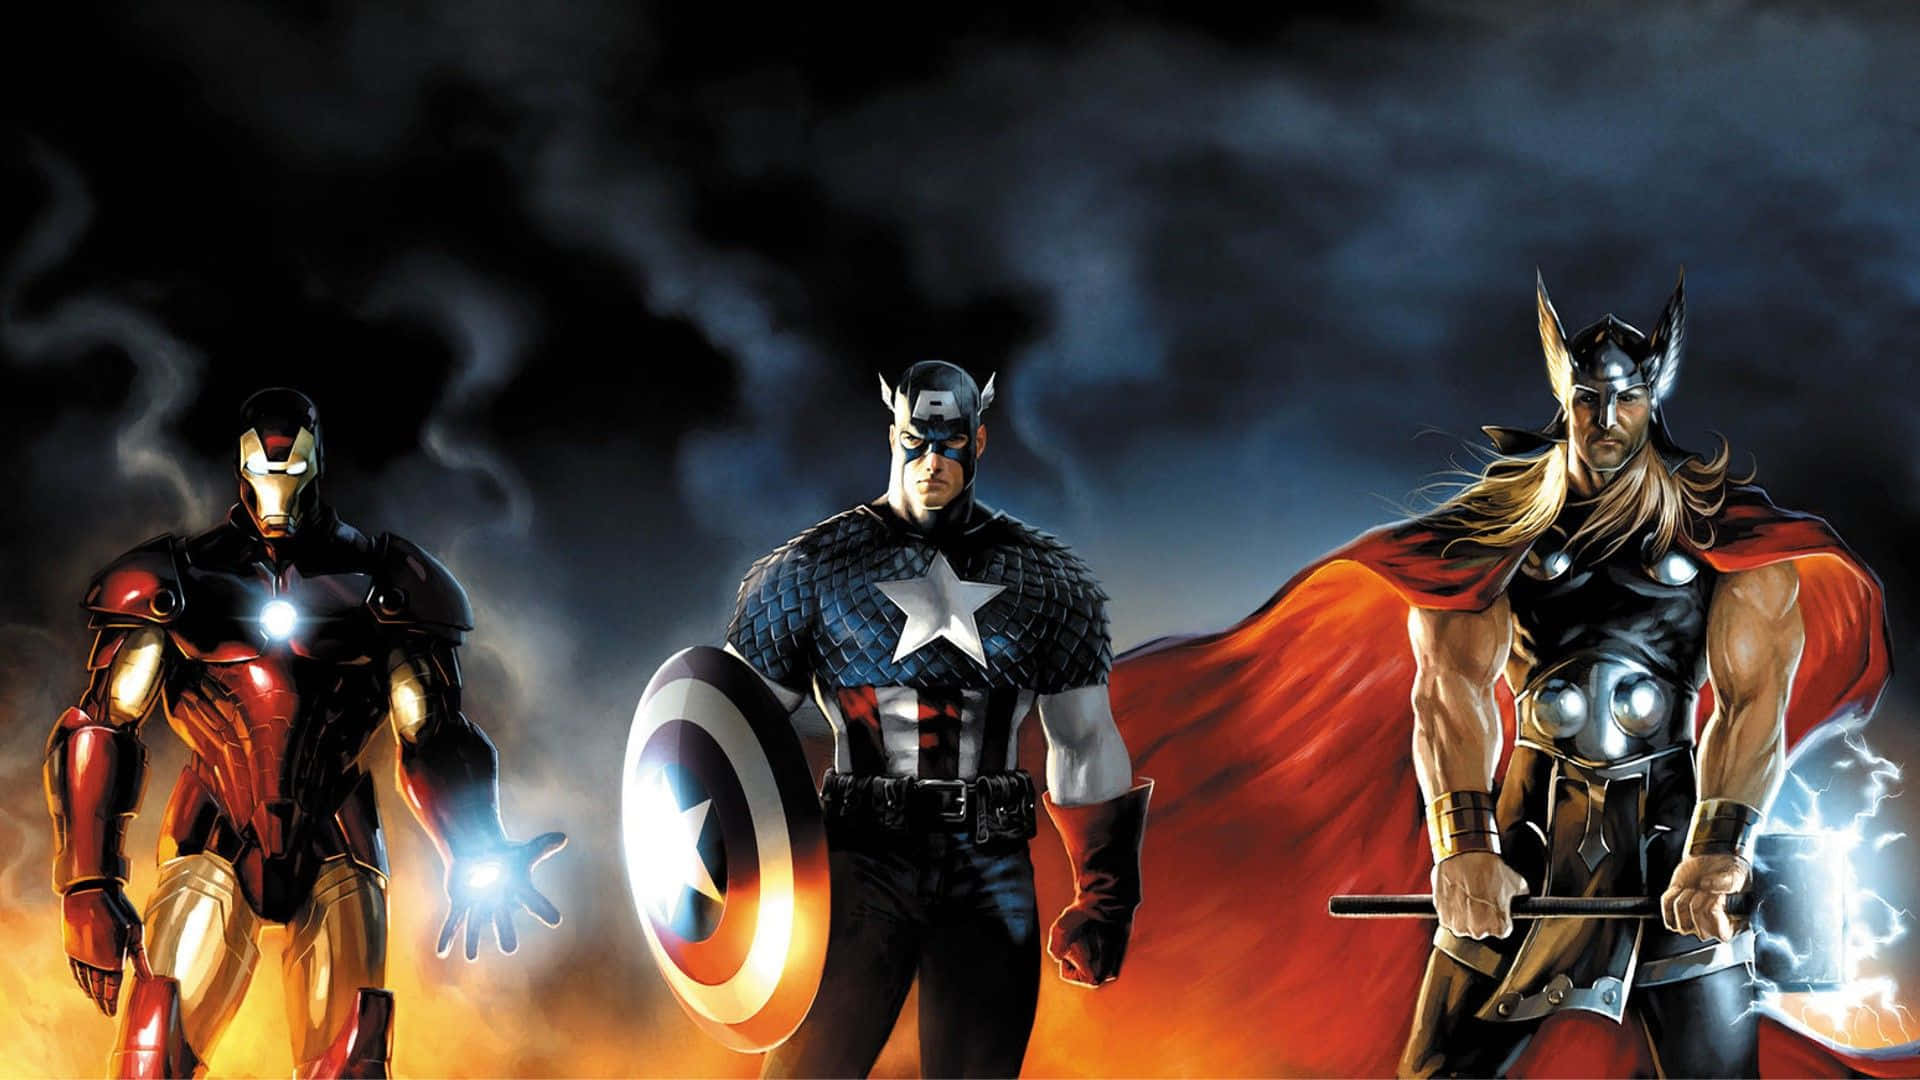 “The Battle between Iron Man and Thor has Begun!” Wallpaper